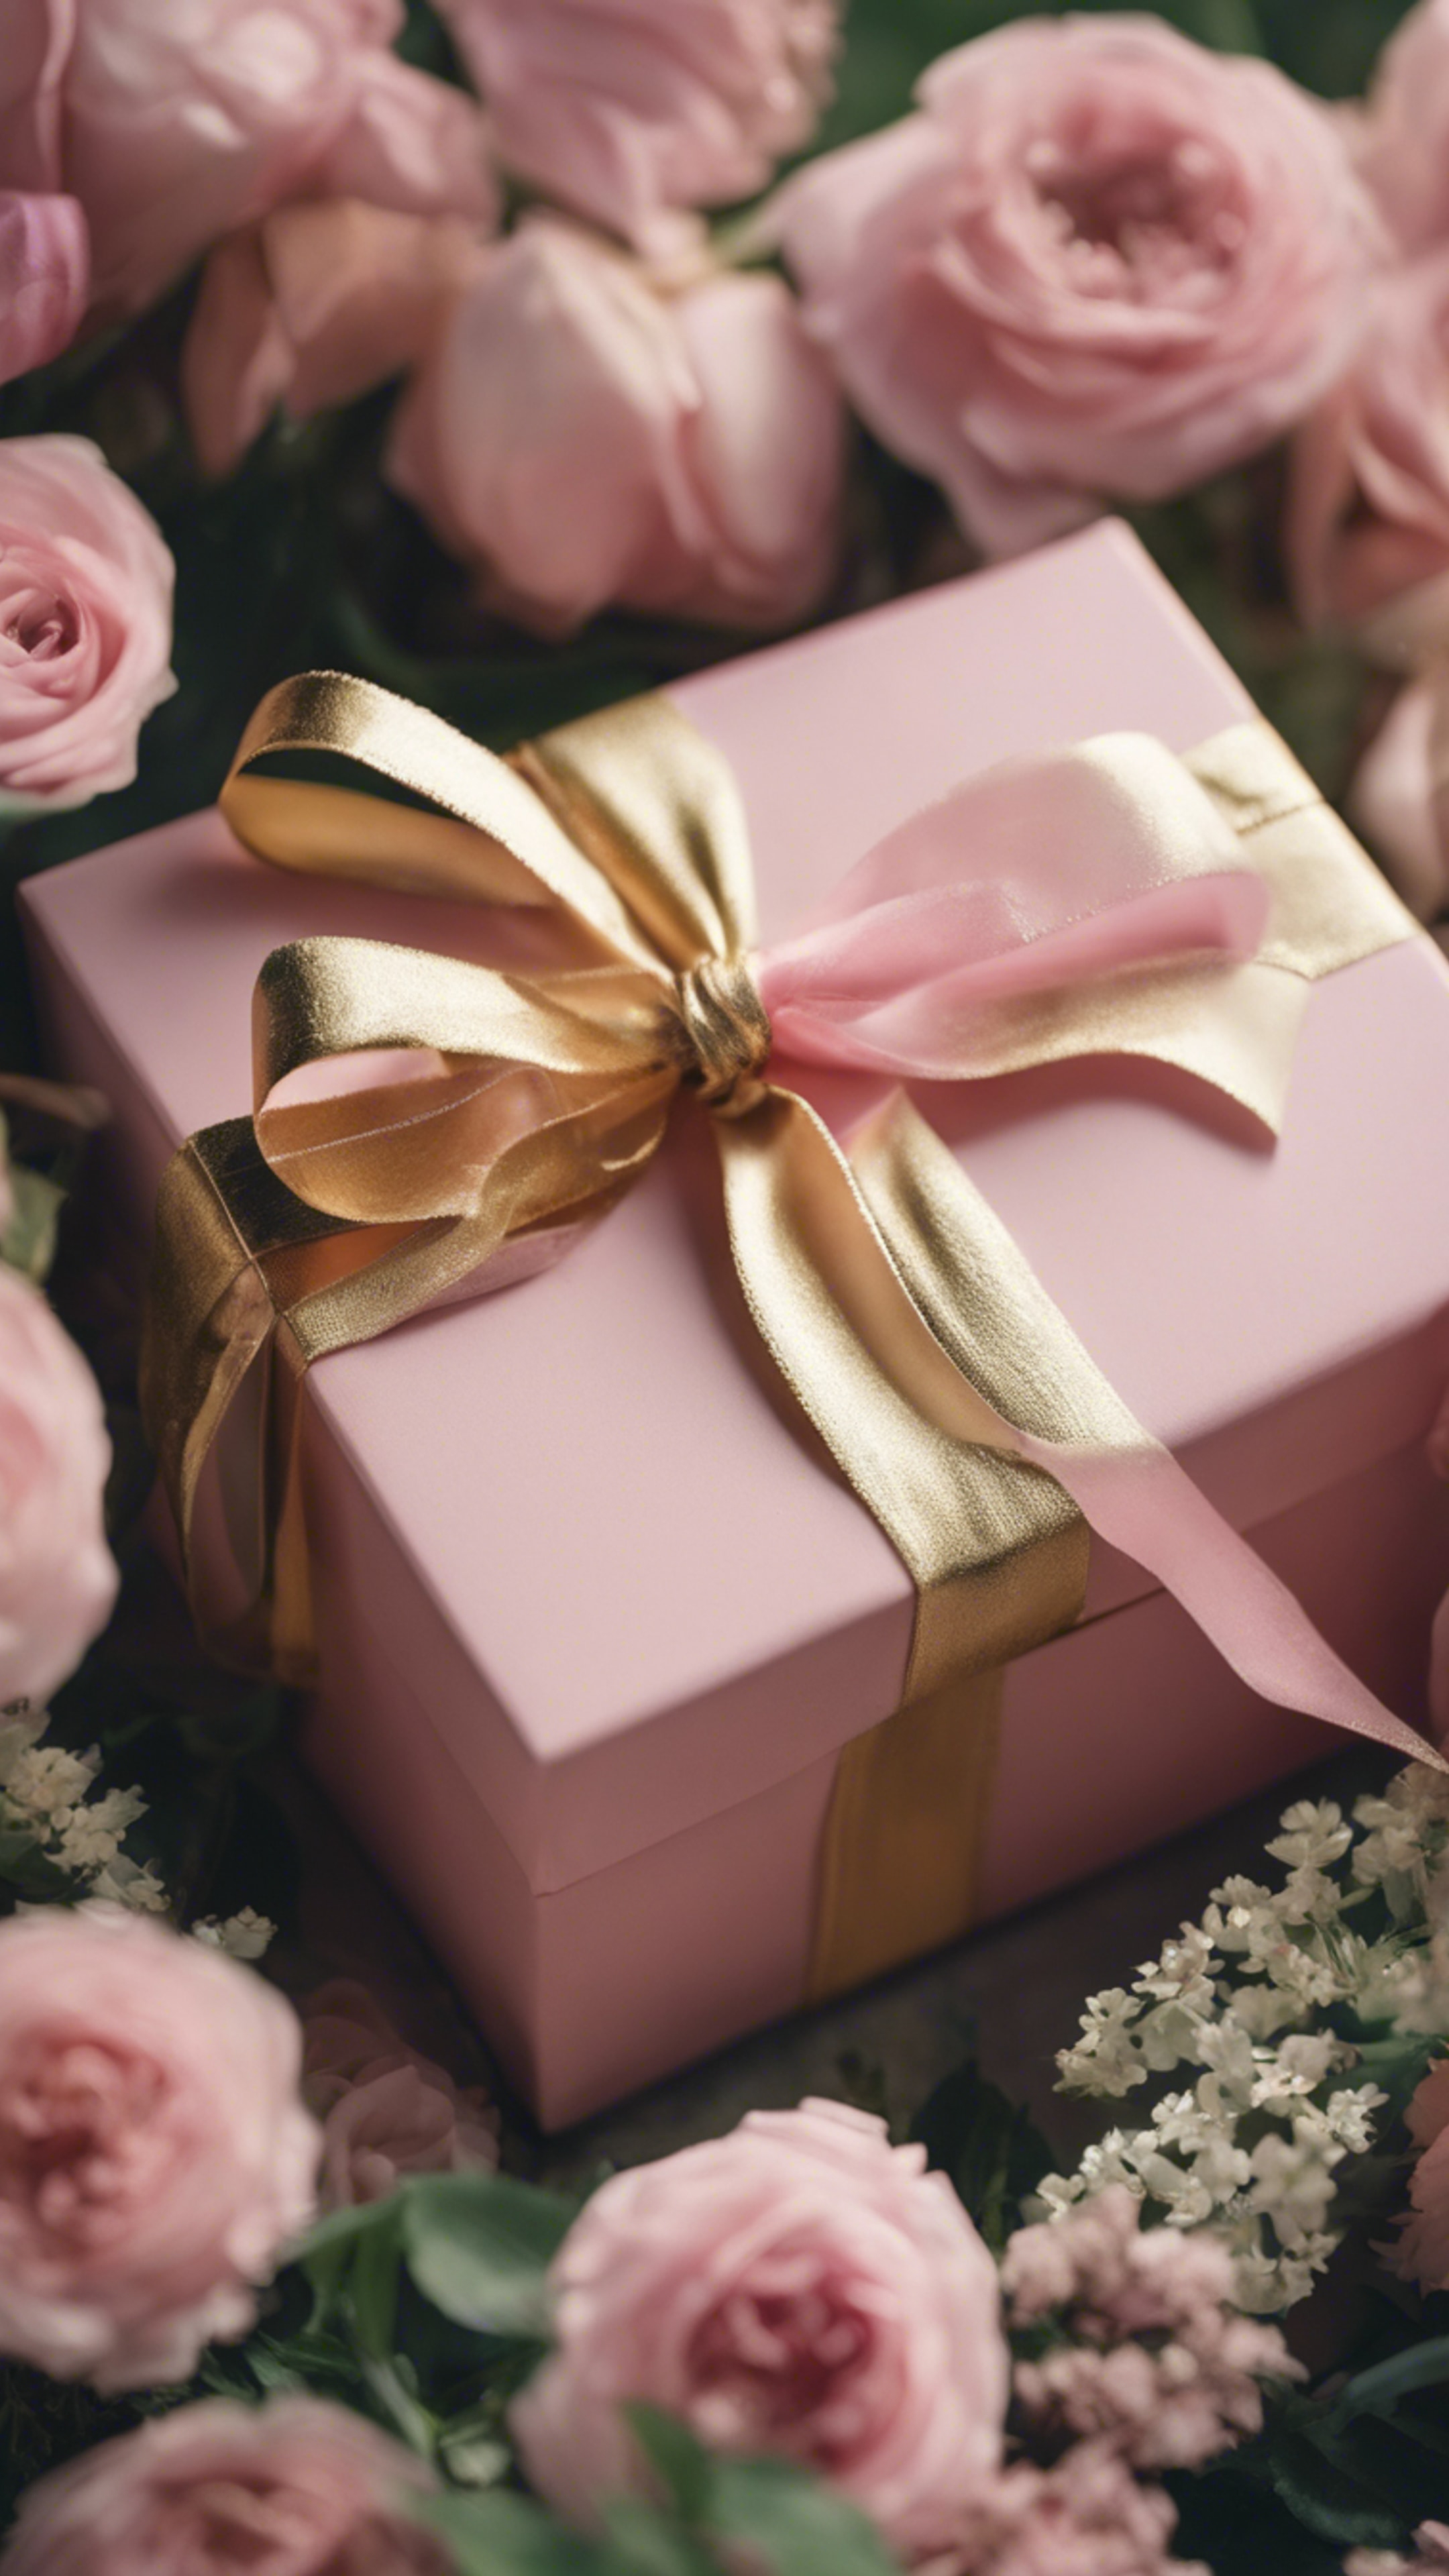 A gold-ribboned pink gift box nestled amongst flowers and greenery. کاغذ دیواری[057f26c1d4b14d2a96a8]